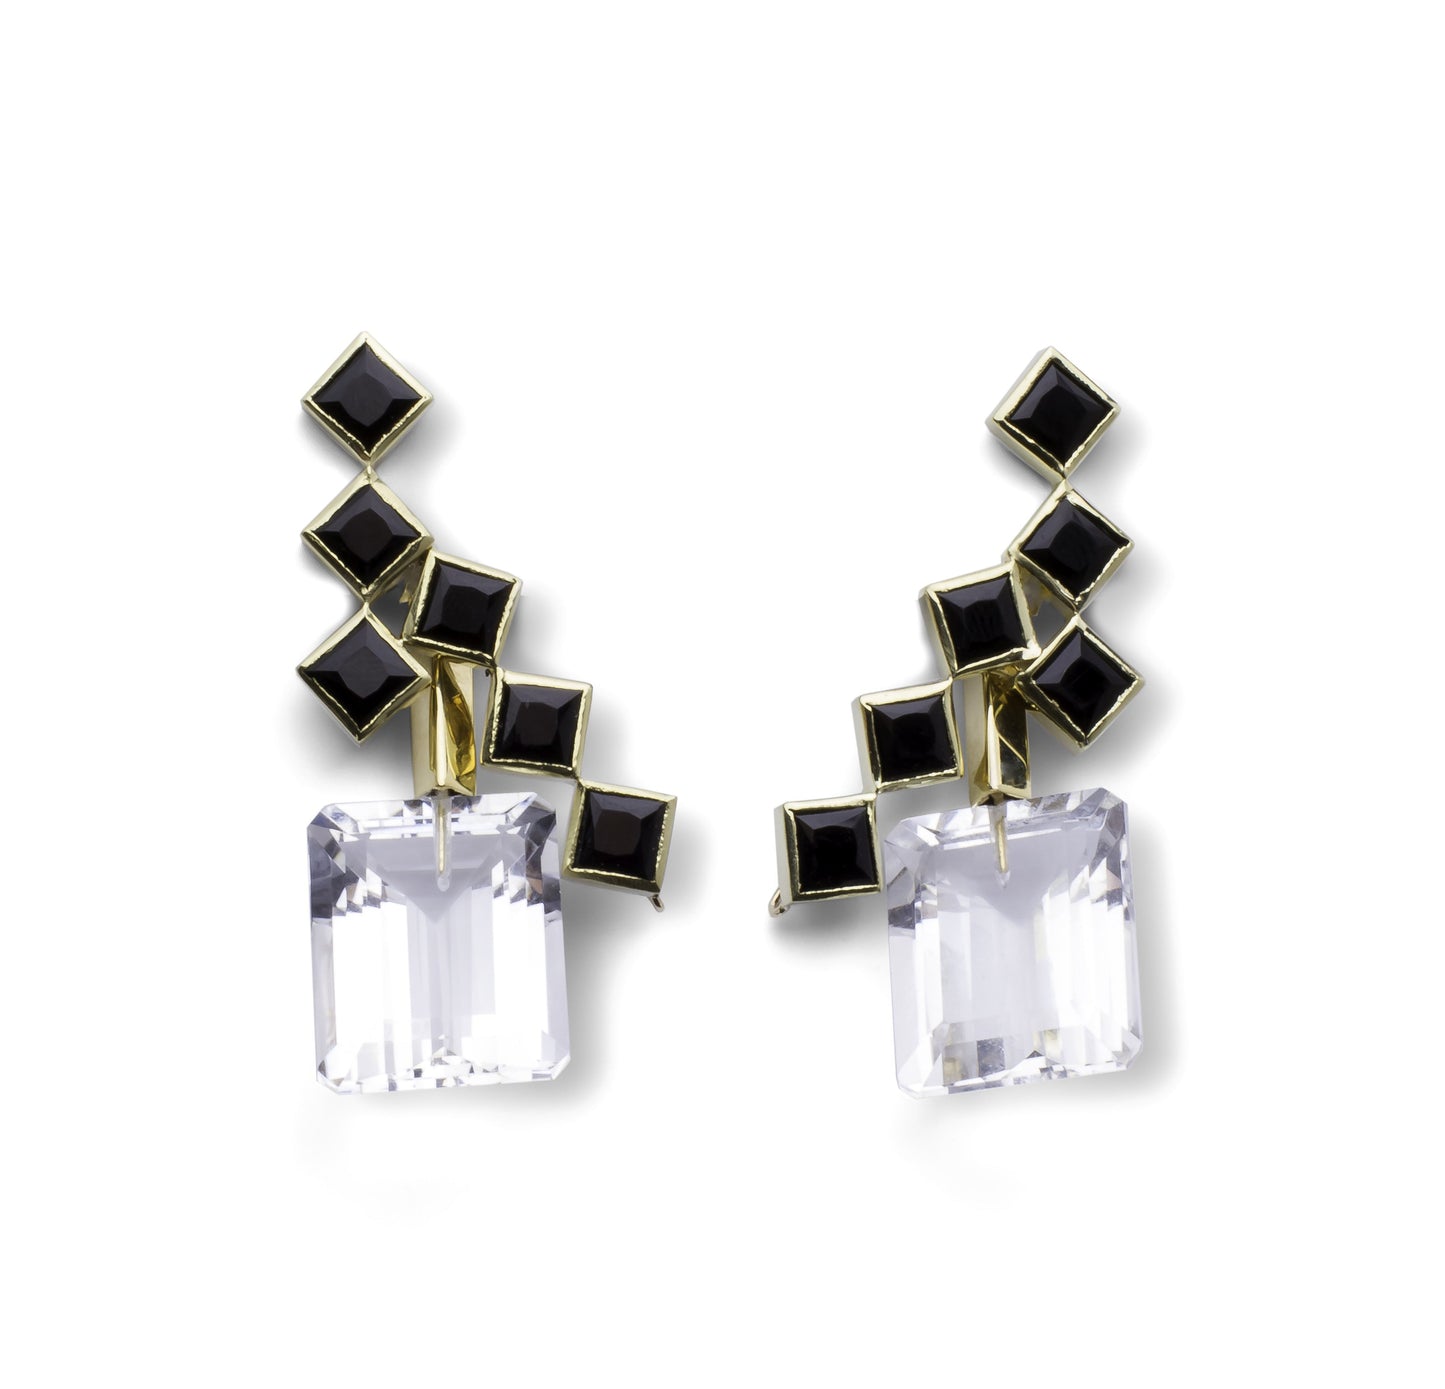 Black Onyx 57th Street Earrings with White Topaz Drops